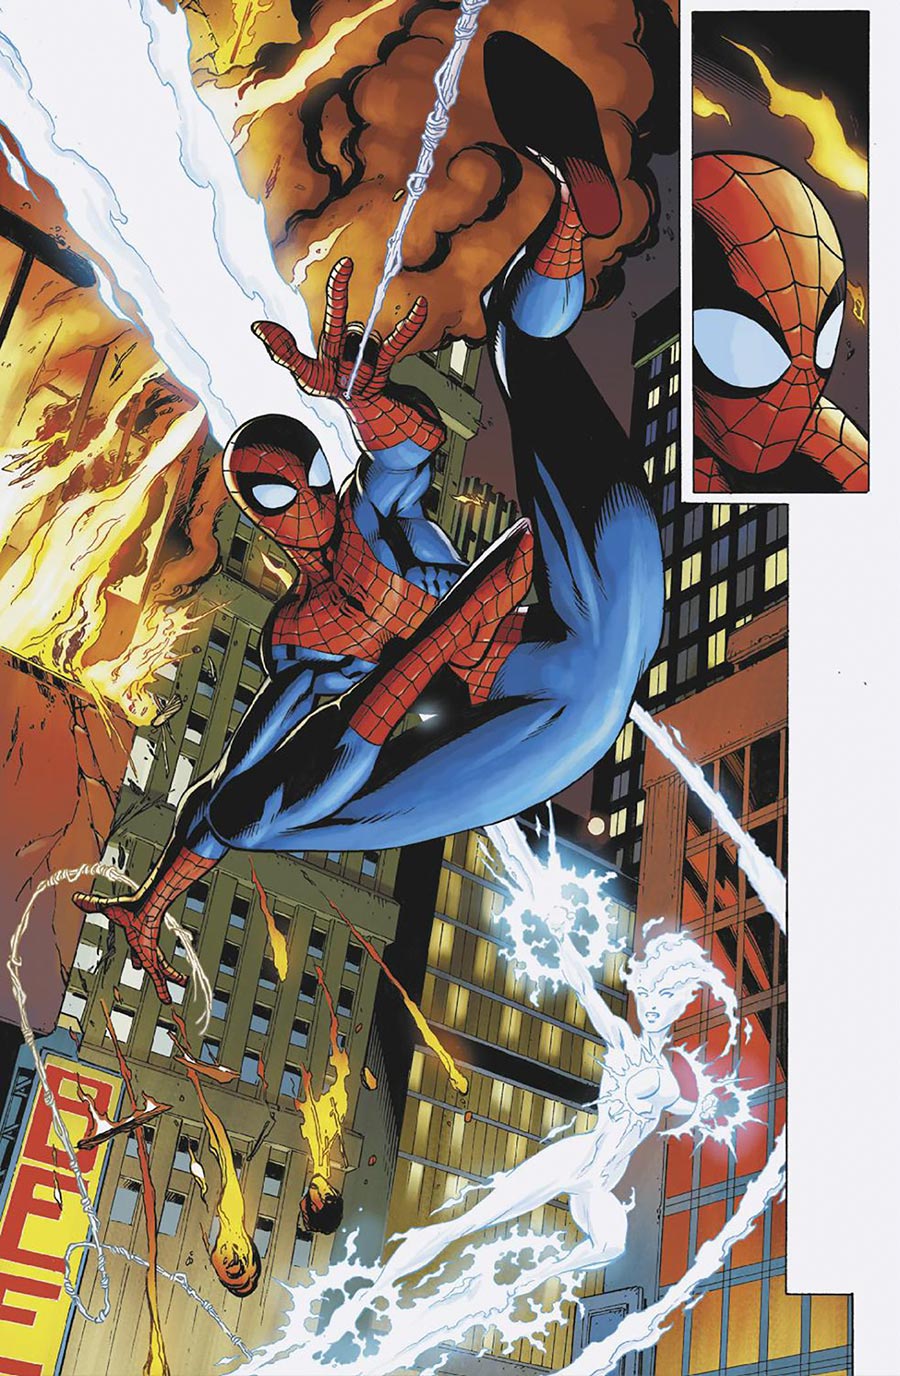 Superior Spider-Man Vol 3 #1 Cover G 2nd Ptg Incentive Mark Bagley Virgin Variant Cover